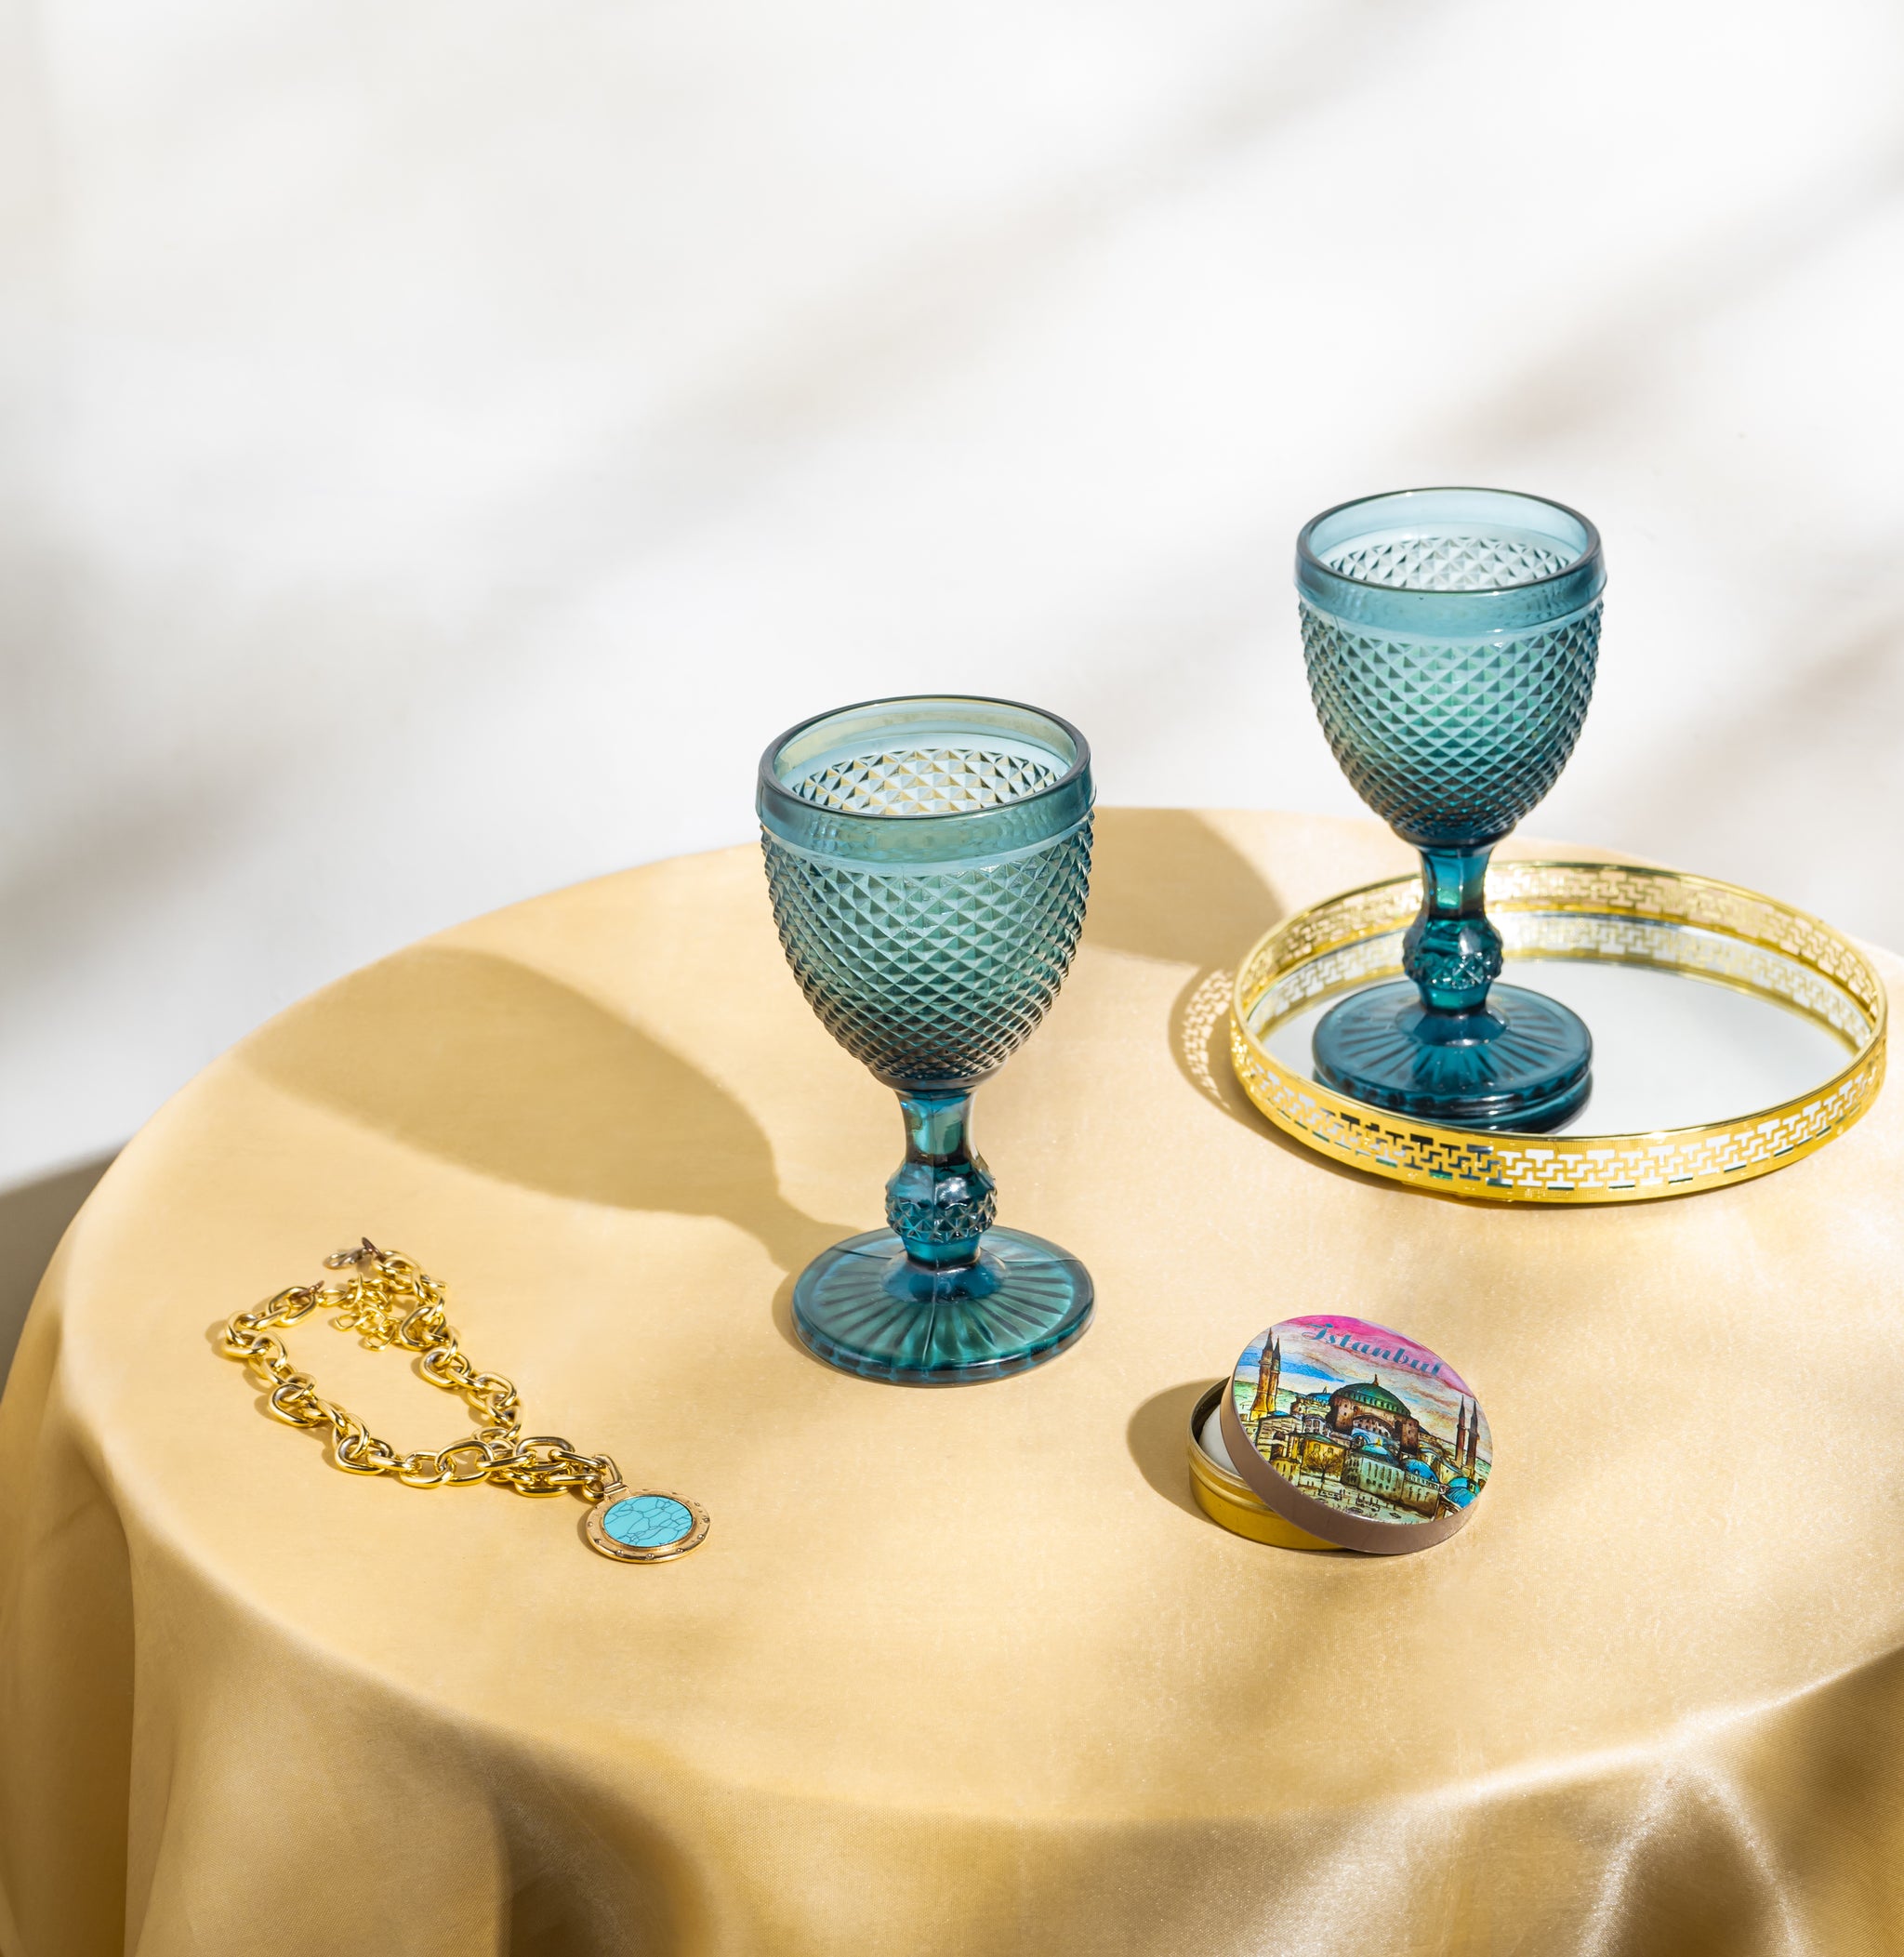 King’s Goblet Wine Glass 270ml - Set of 2, Blue